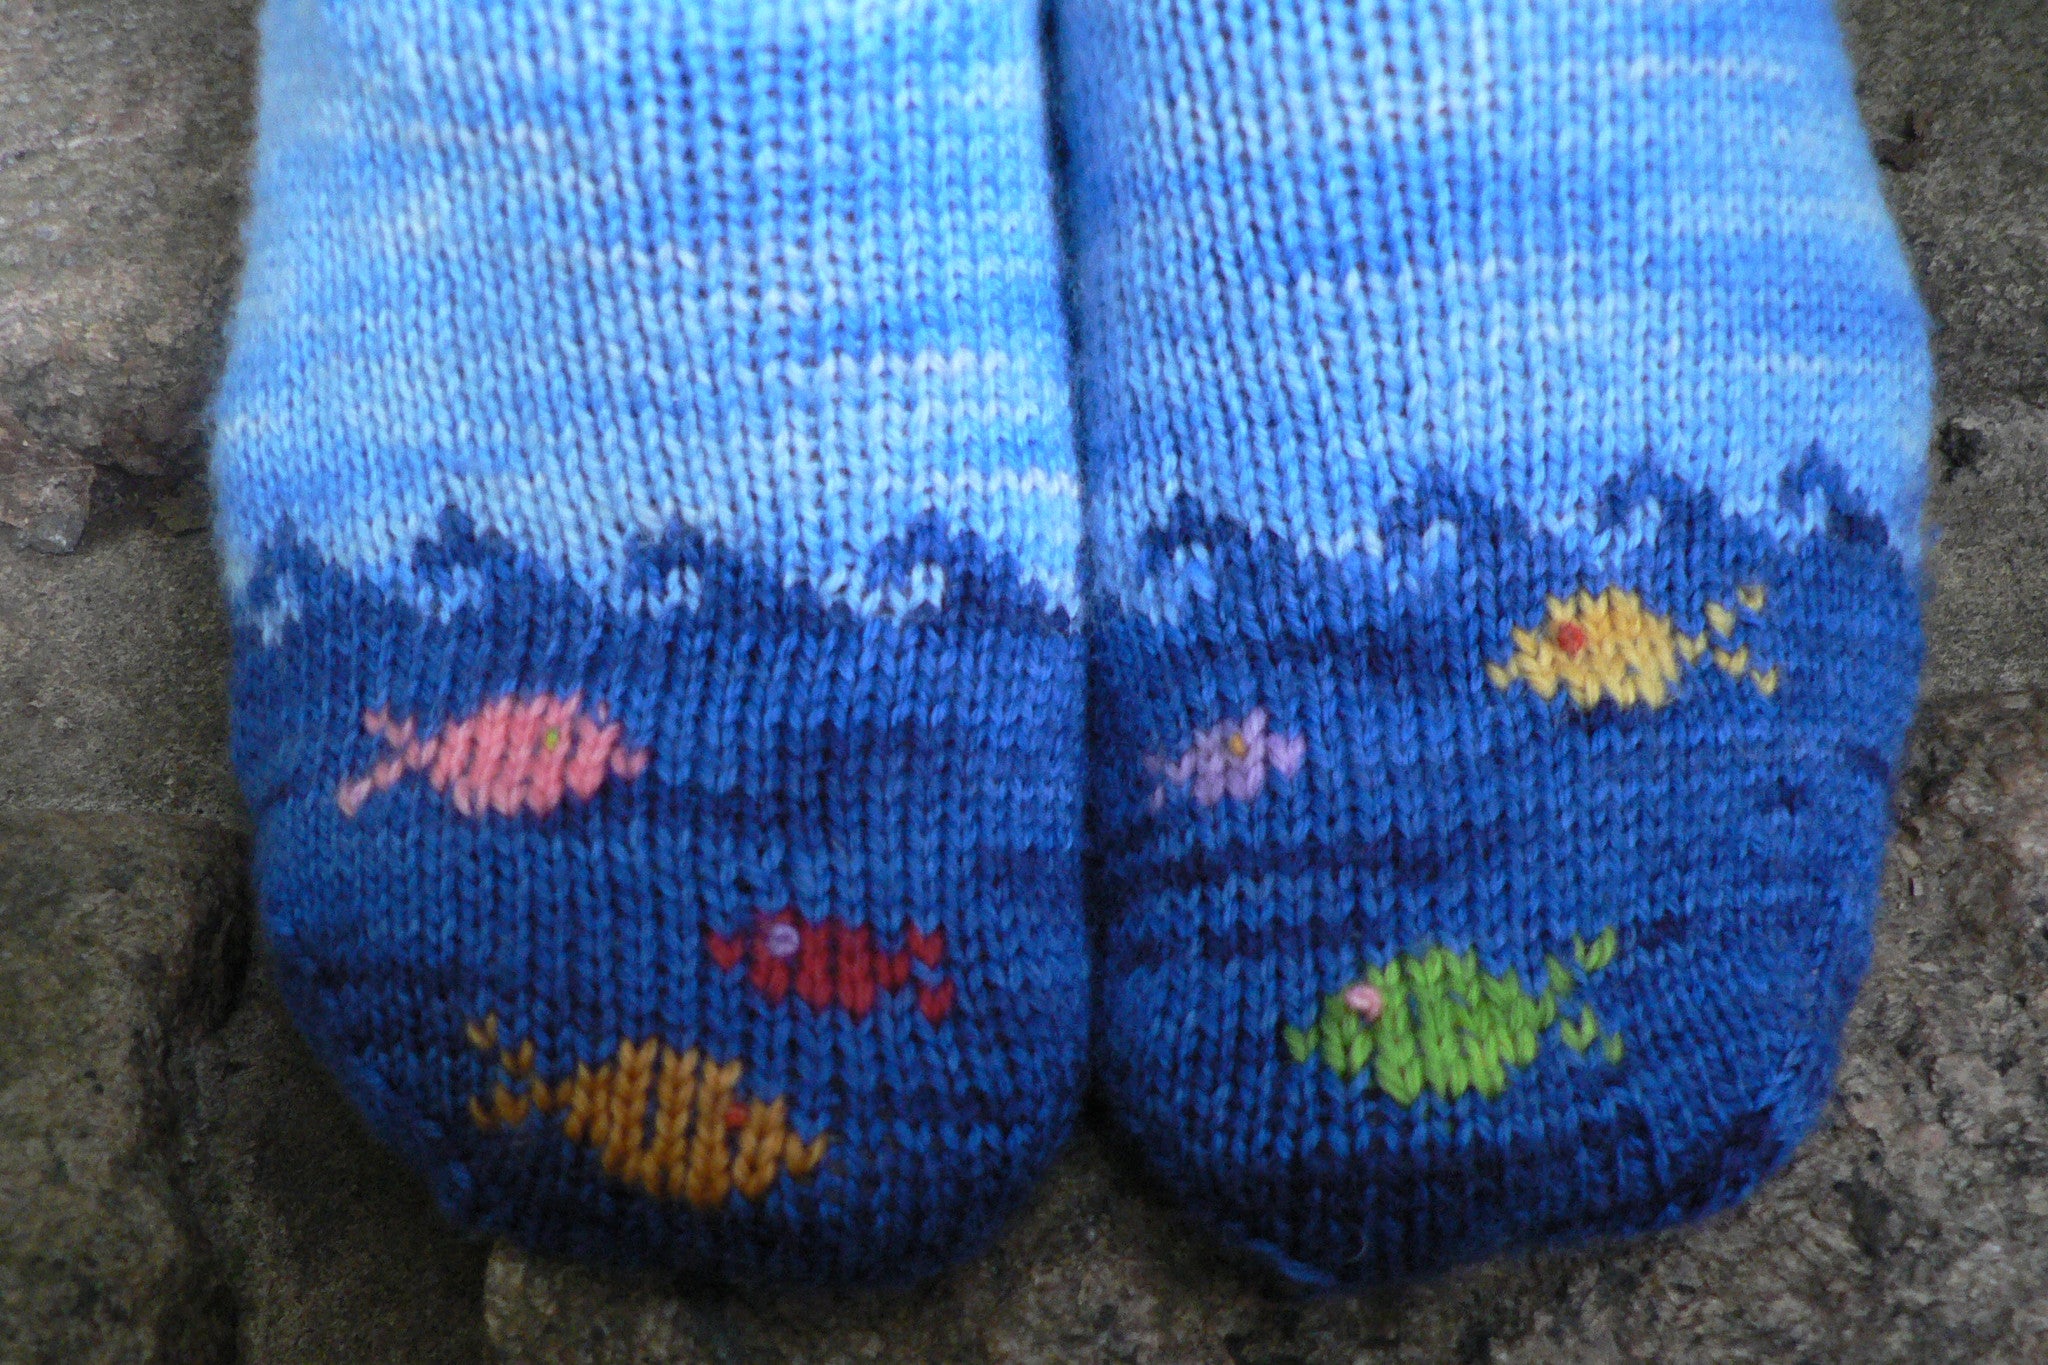 Fish in the Sea socks